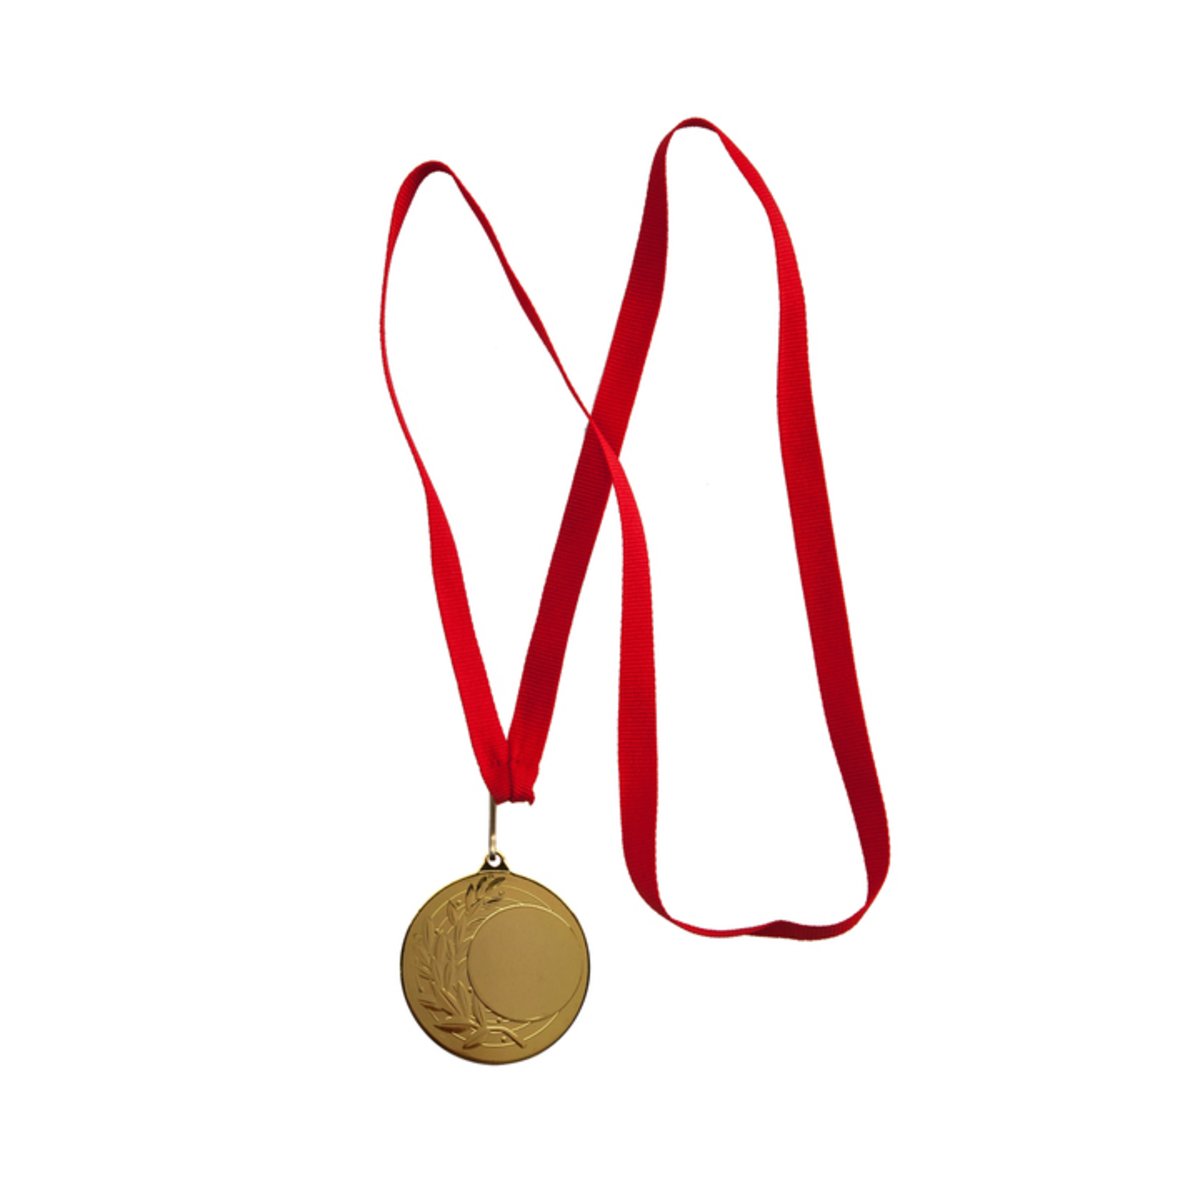 Medal Athlete Win